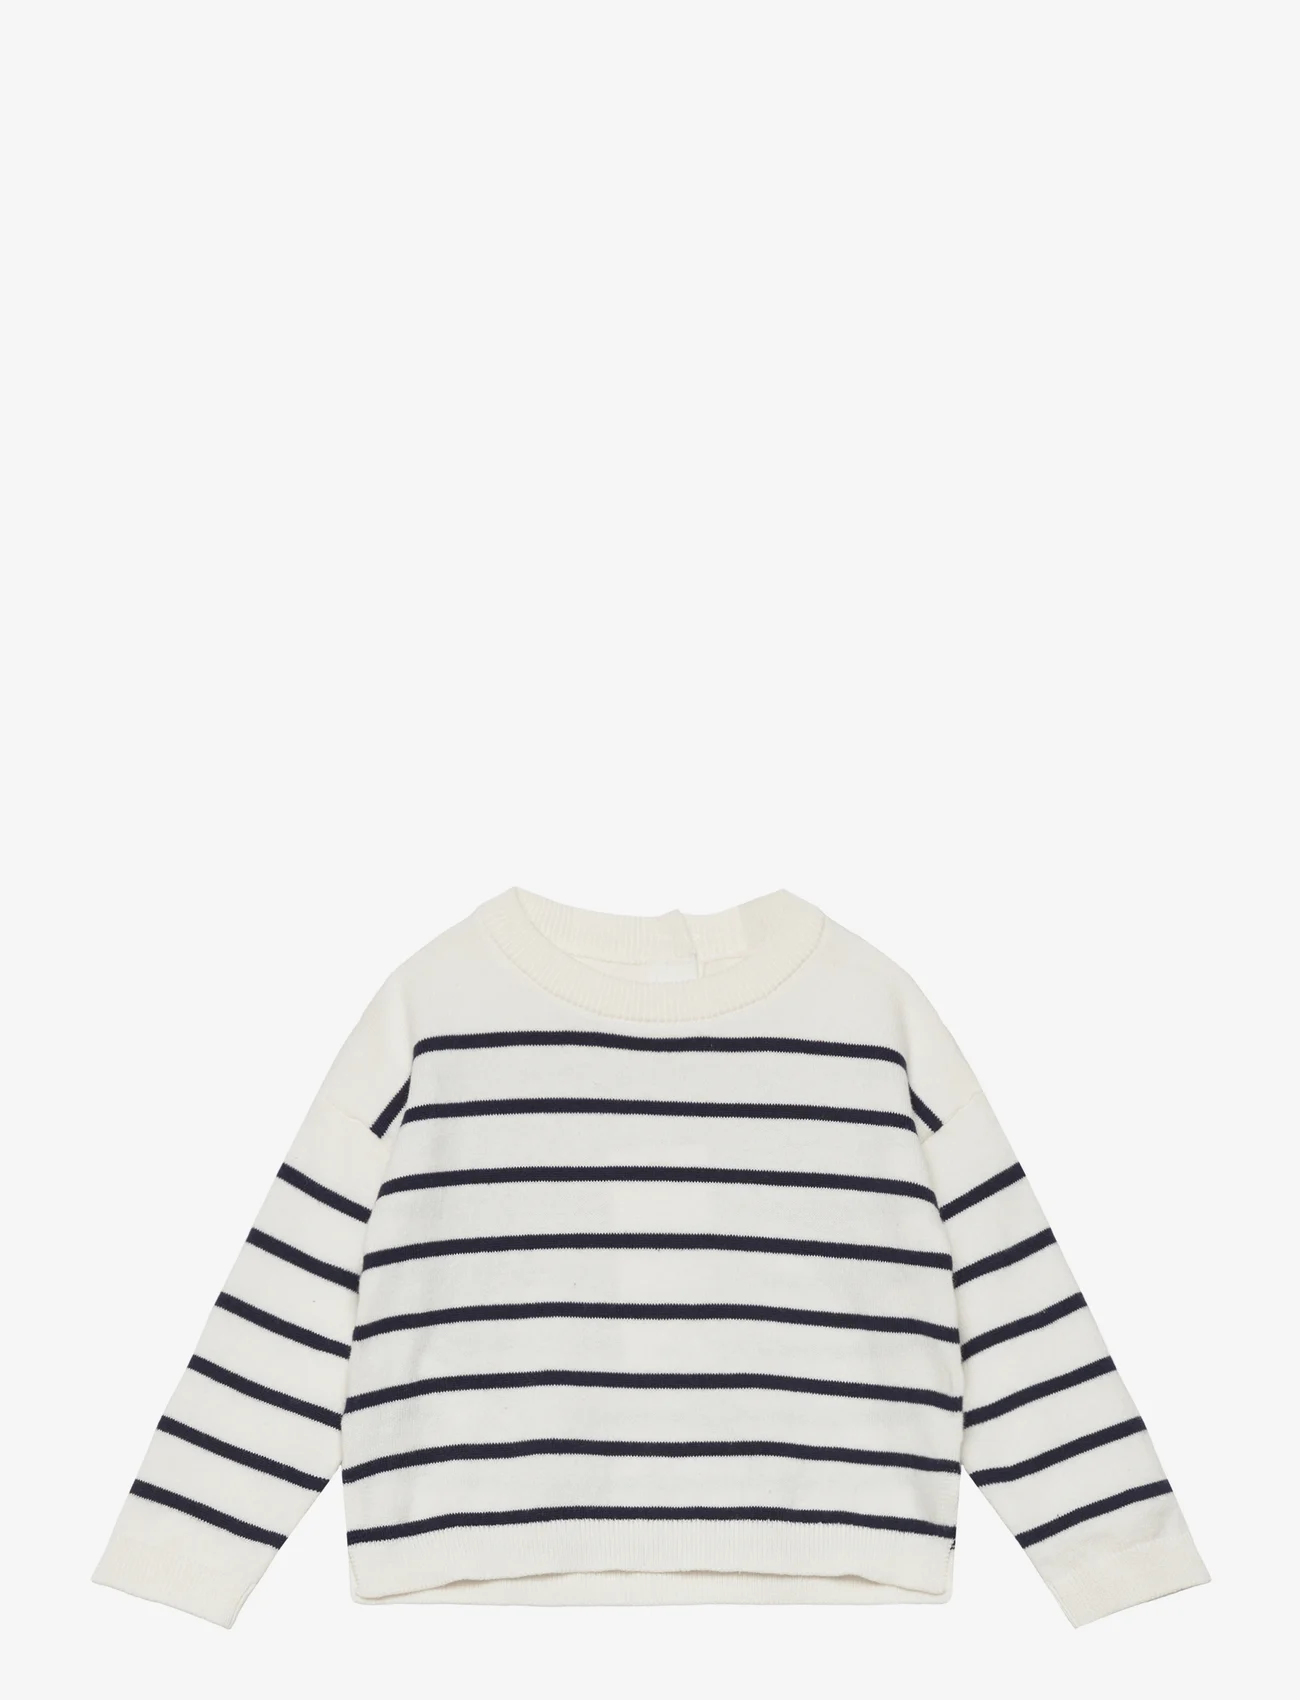 Mango - Stripe pattern sweater - trøjer - natural white - 0